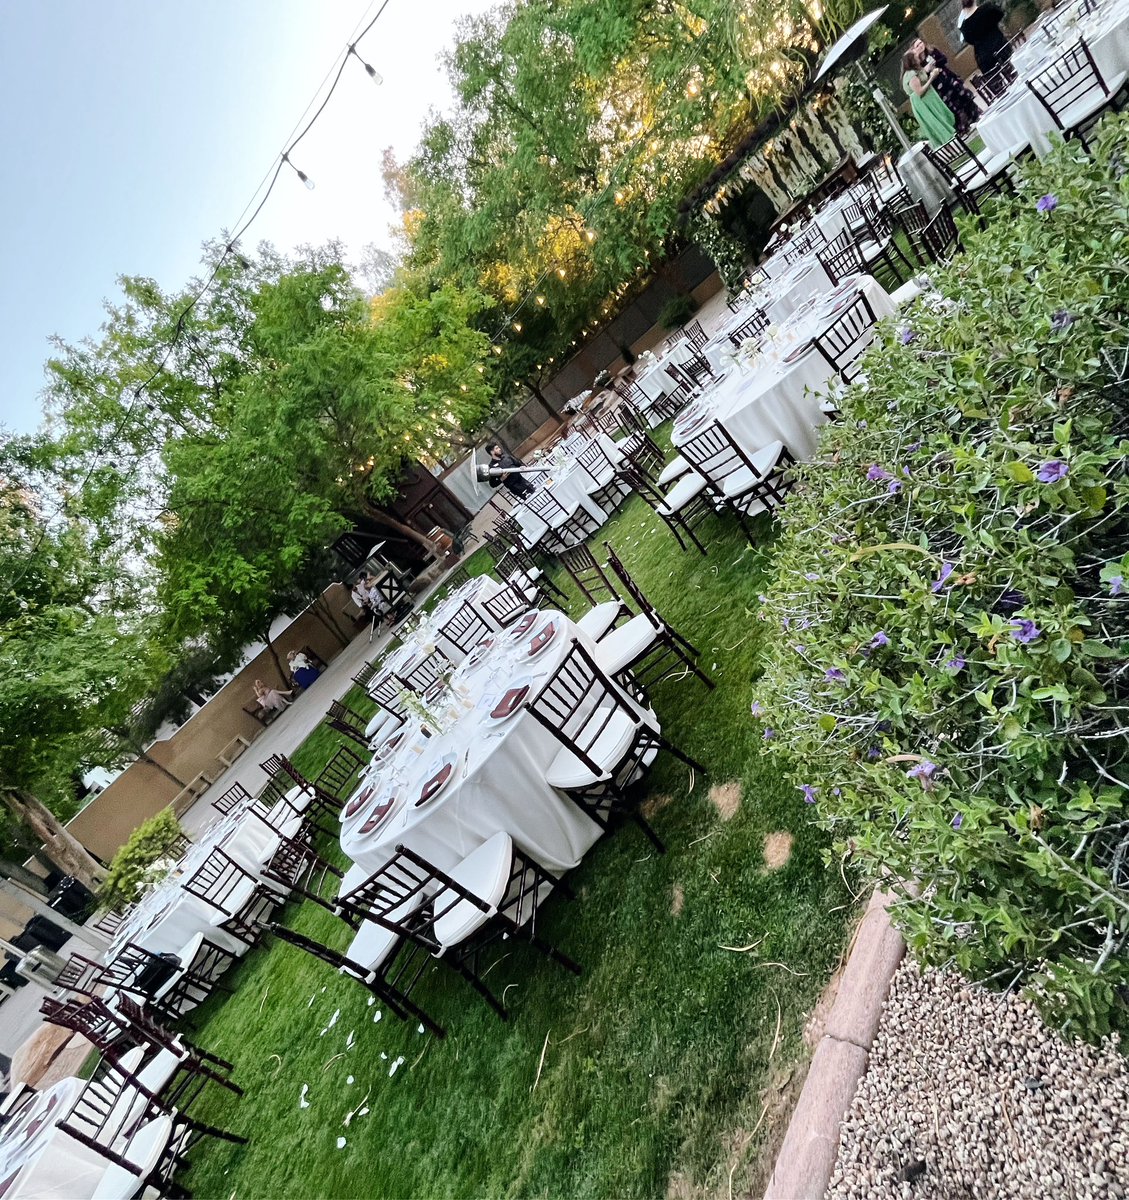 That backyard wedding landscape…PERFECTION 😍🤩

#backyardwedding #weddingcatering #blankcanvas #dowhatyouwant #howyouwantit #wedoitall #forkyeah